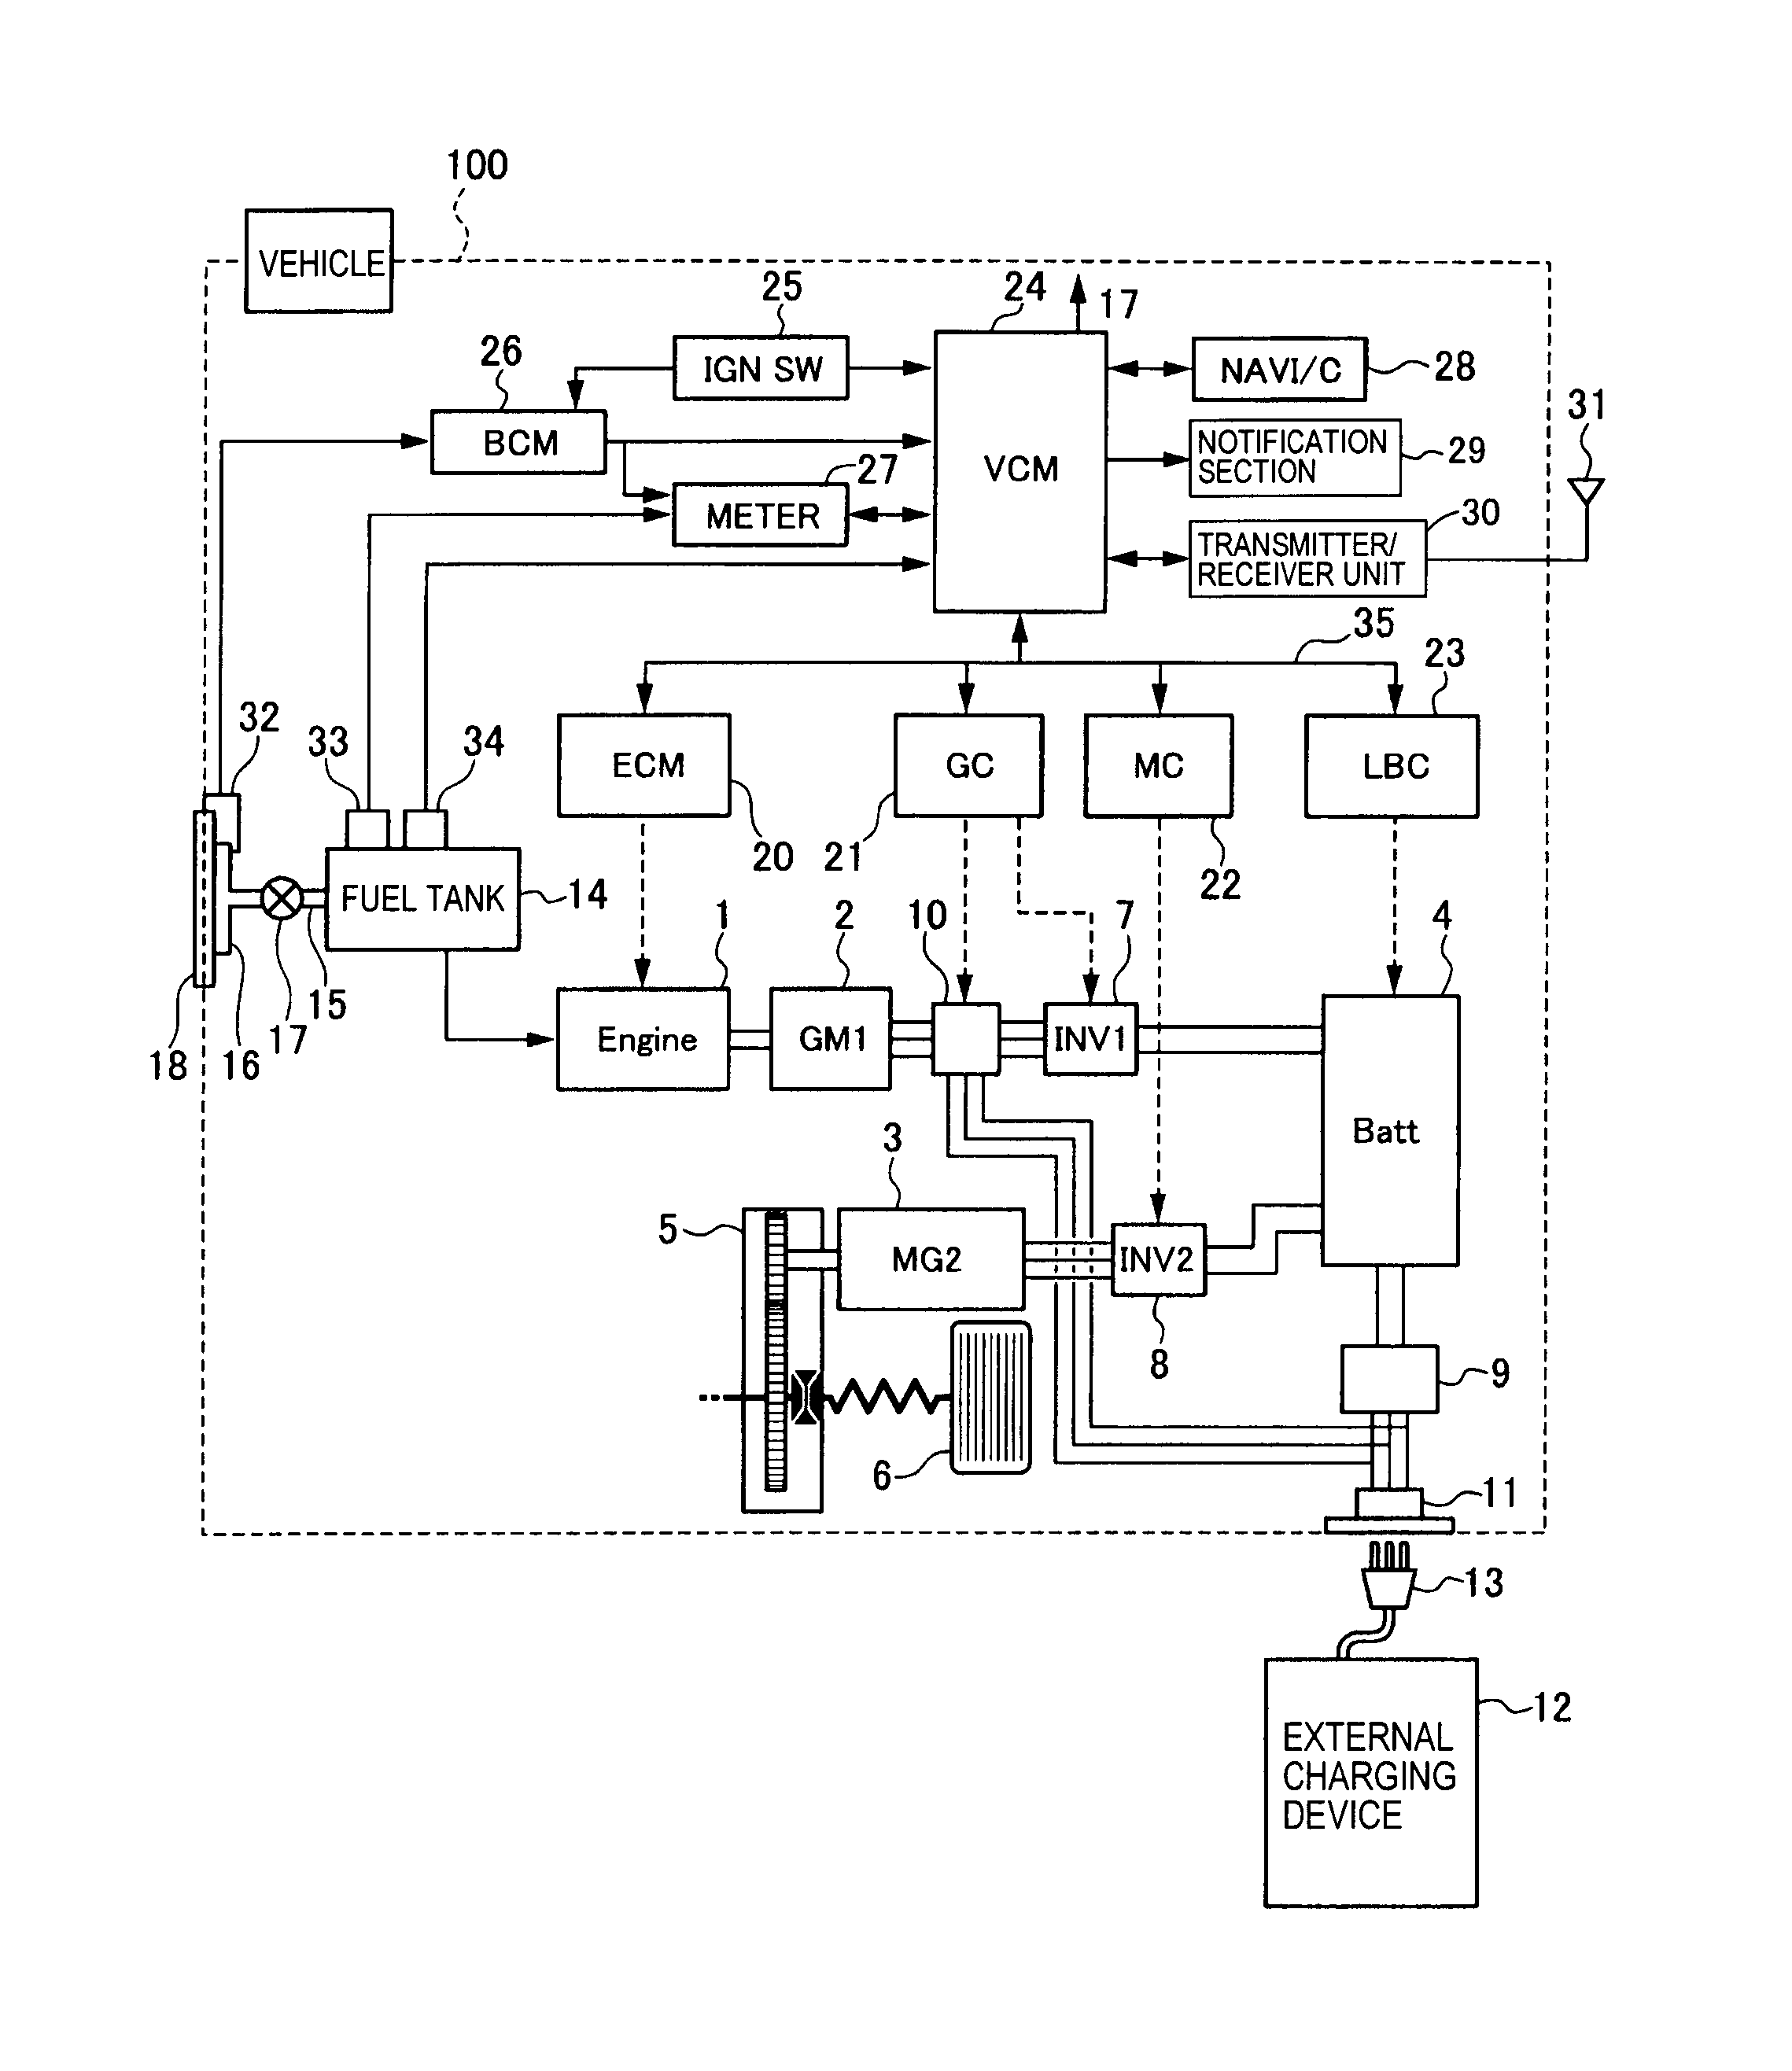 copeland potential relay wiring diagram